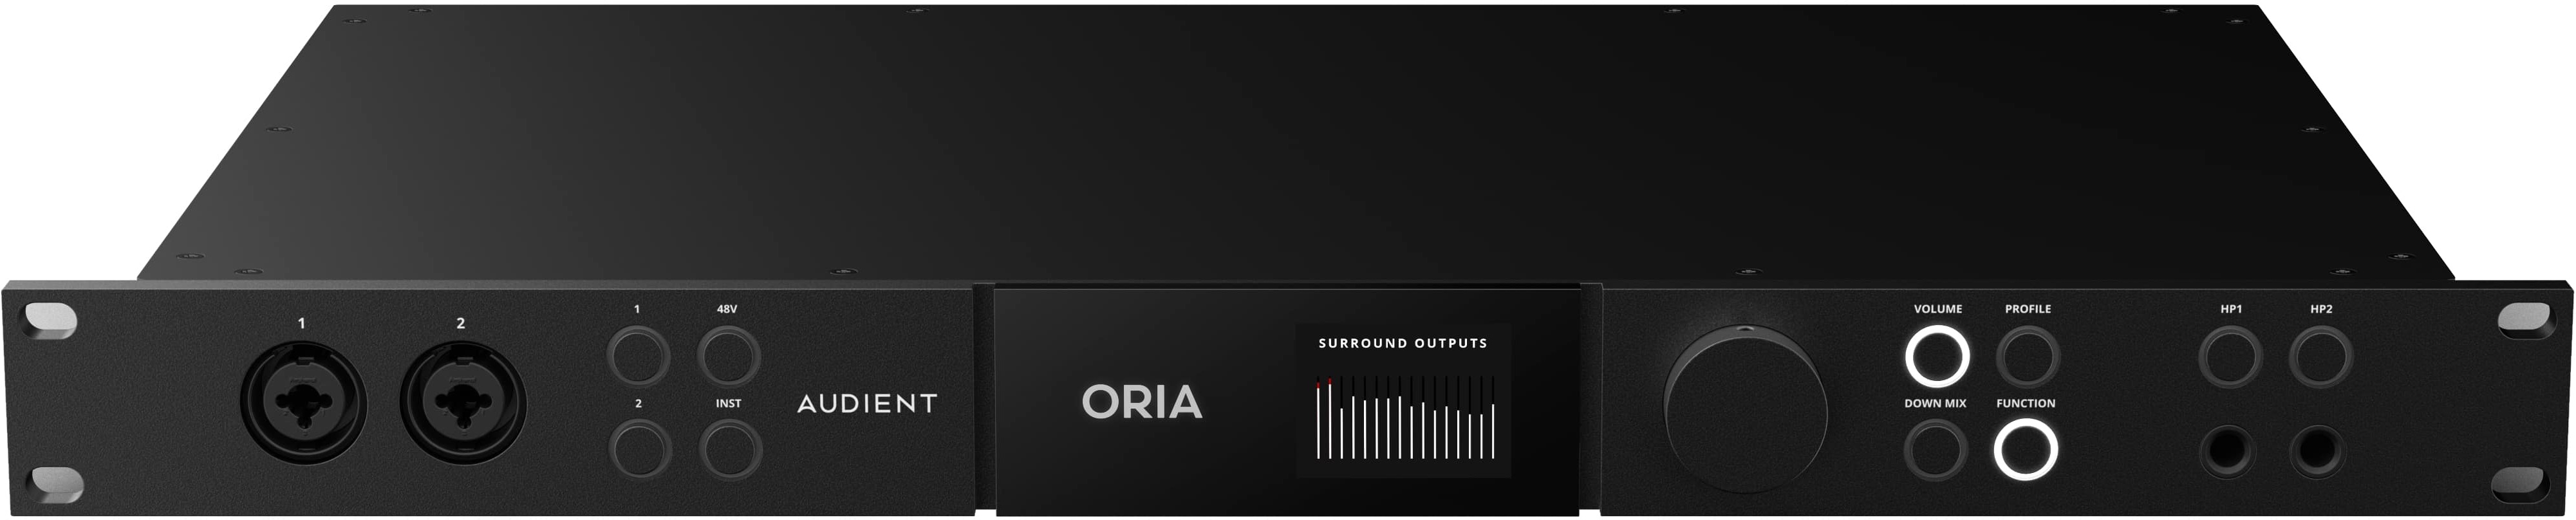 Audient Oria - USB audio-interface - Main picture